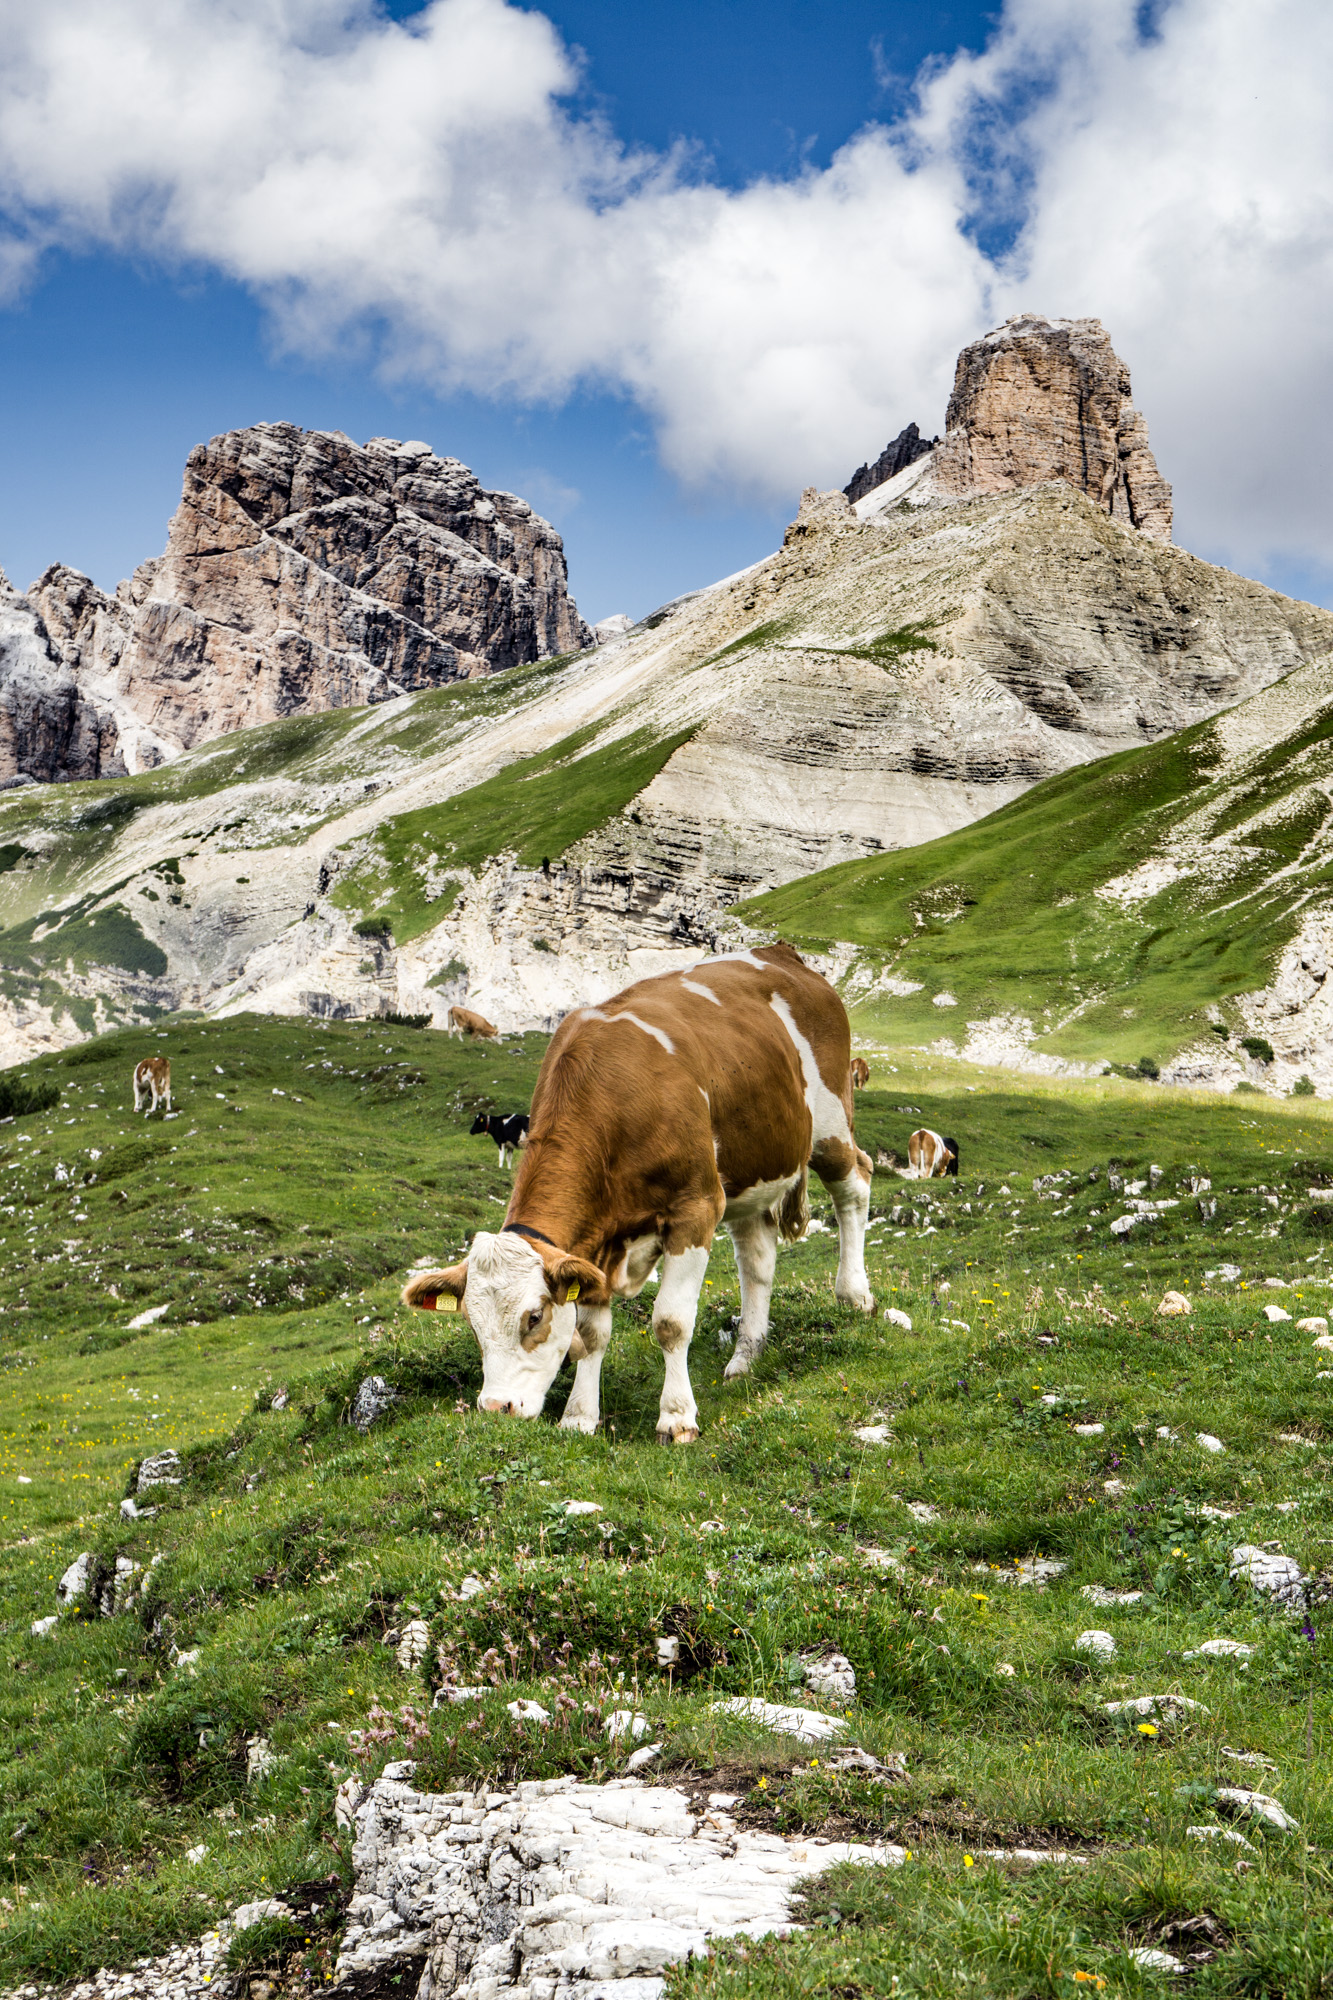 France/Italy roadtrip – Dolomites, part 2